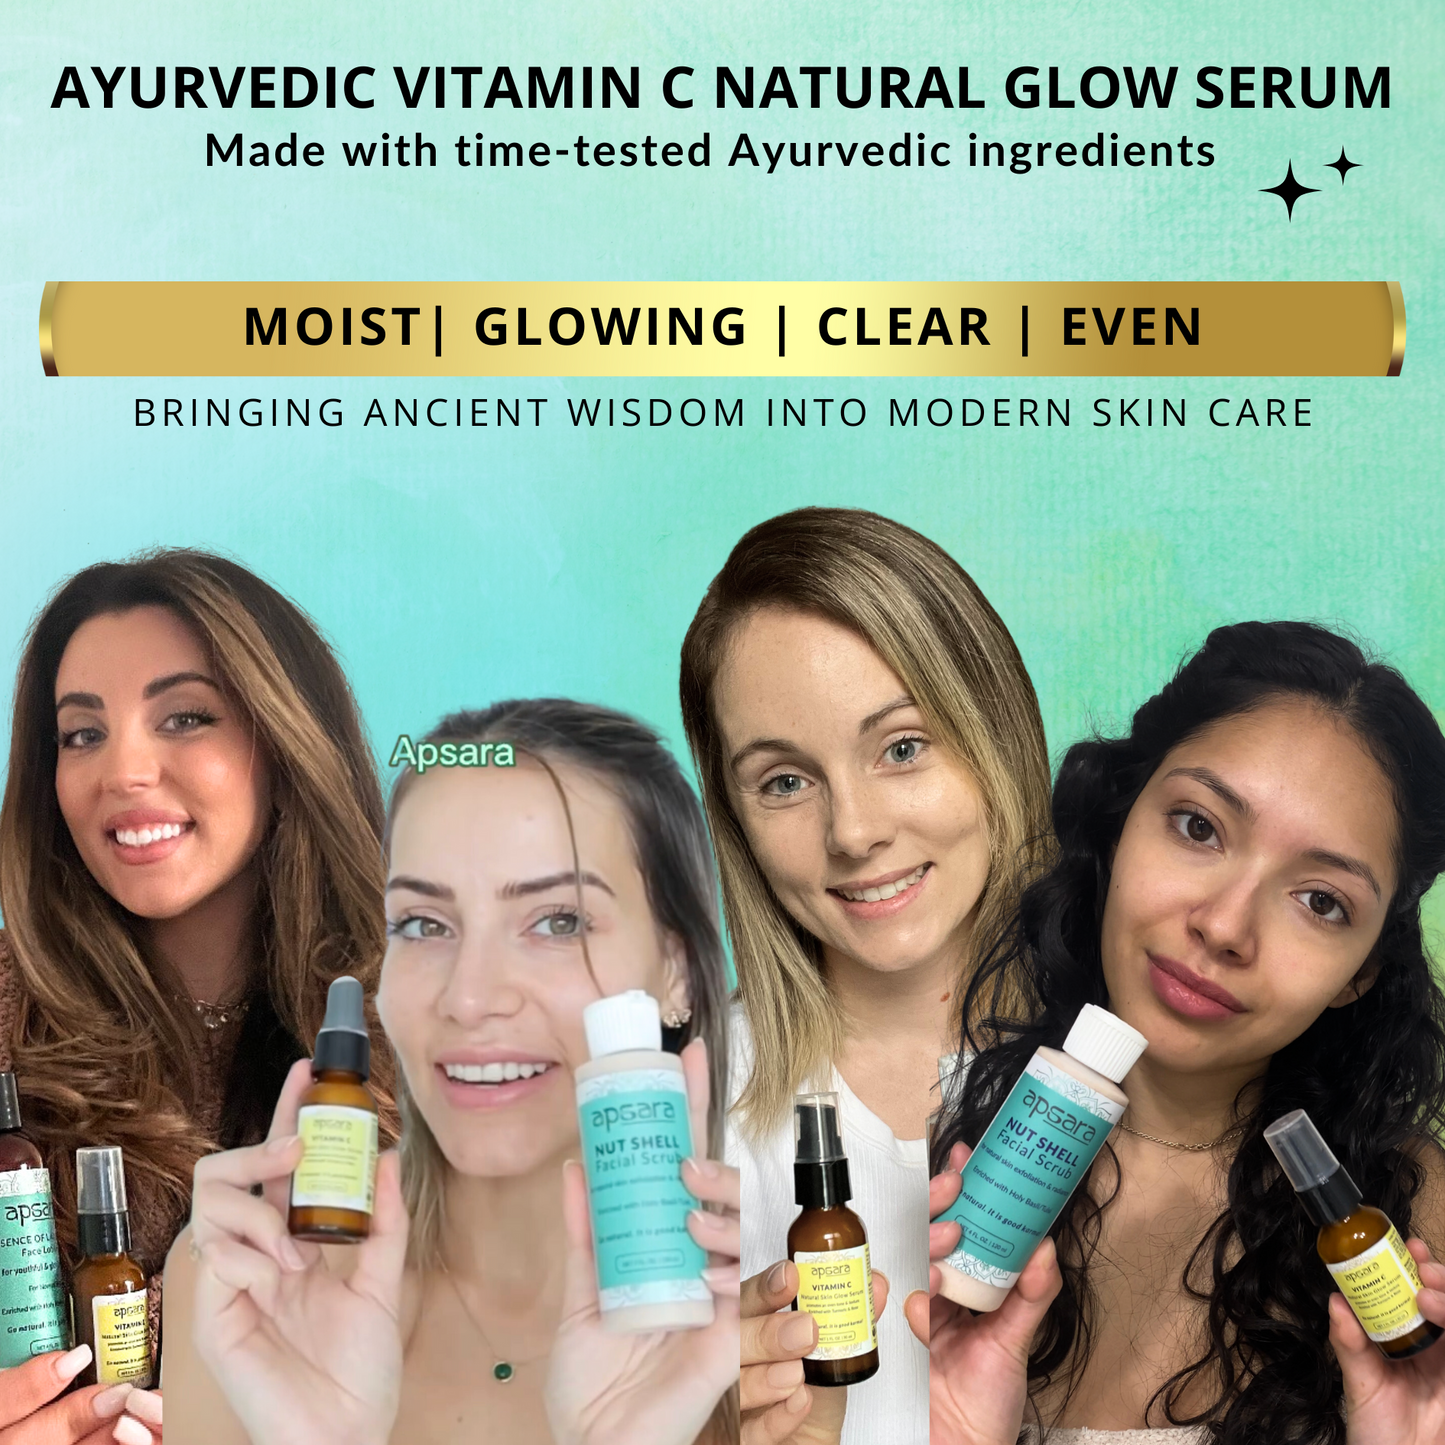 Ayurvedic Vitamin C Natural Glow Serum